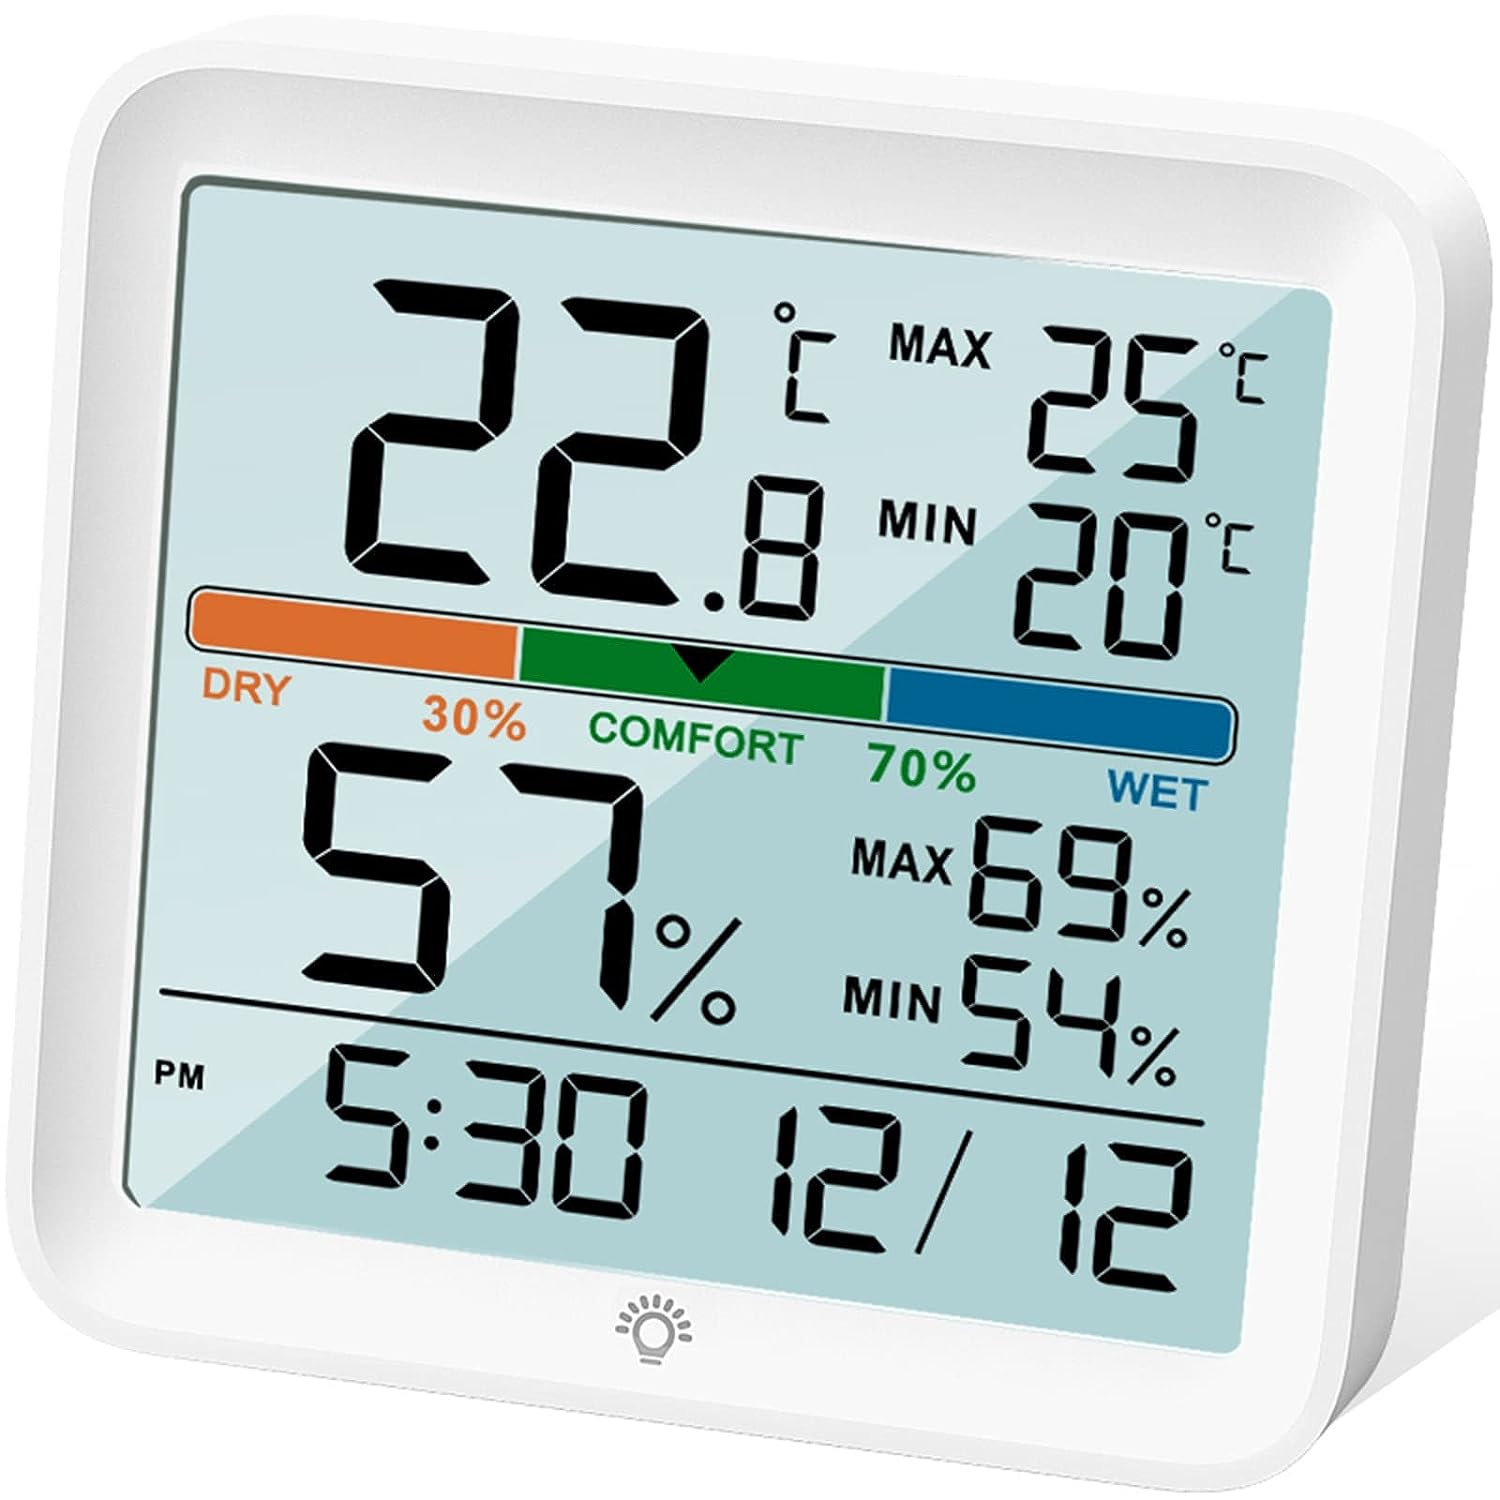 NOKLEAD LCD Digital Thermometer Hygrometer Indoor Room Temperature